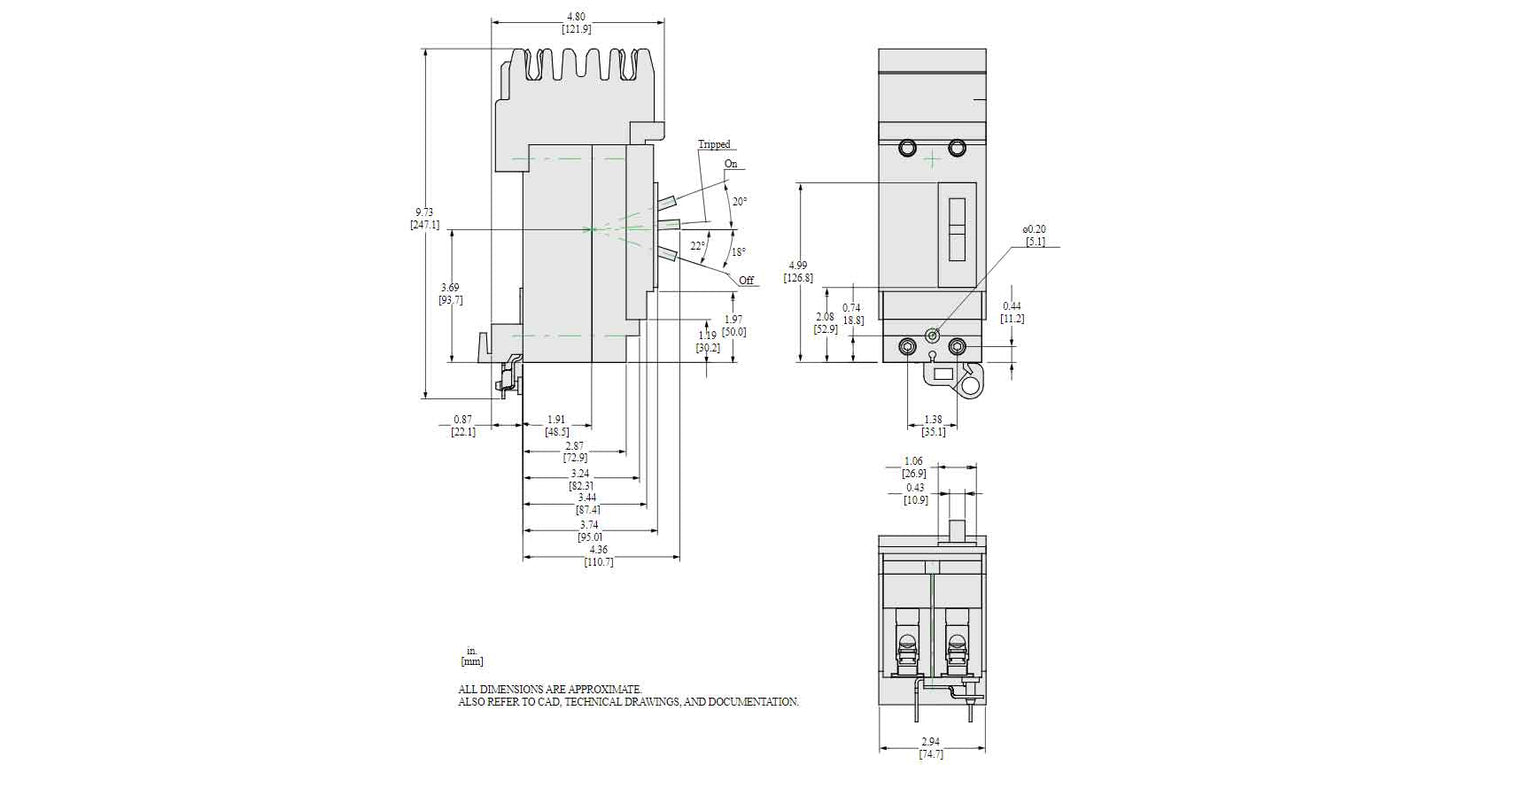 HGA260401 - Square D - Molded Case Circuit Breakers